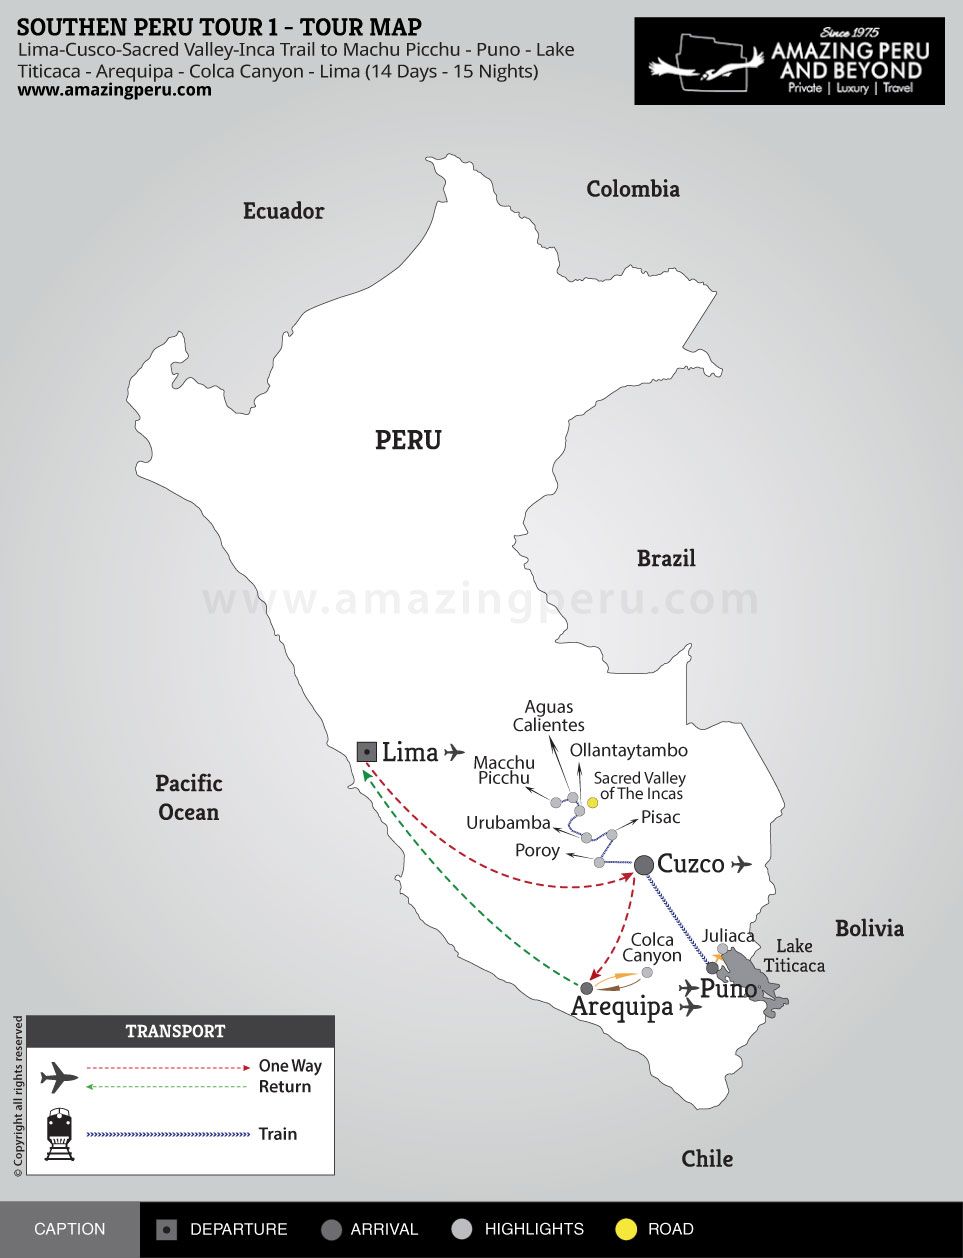 Southen Peru Tour 1 - 15 days / 14 nights.